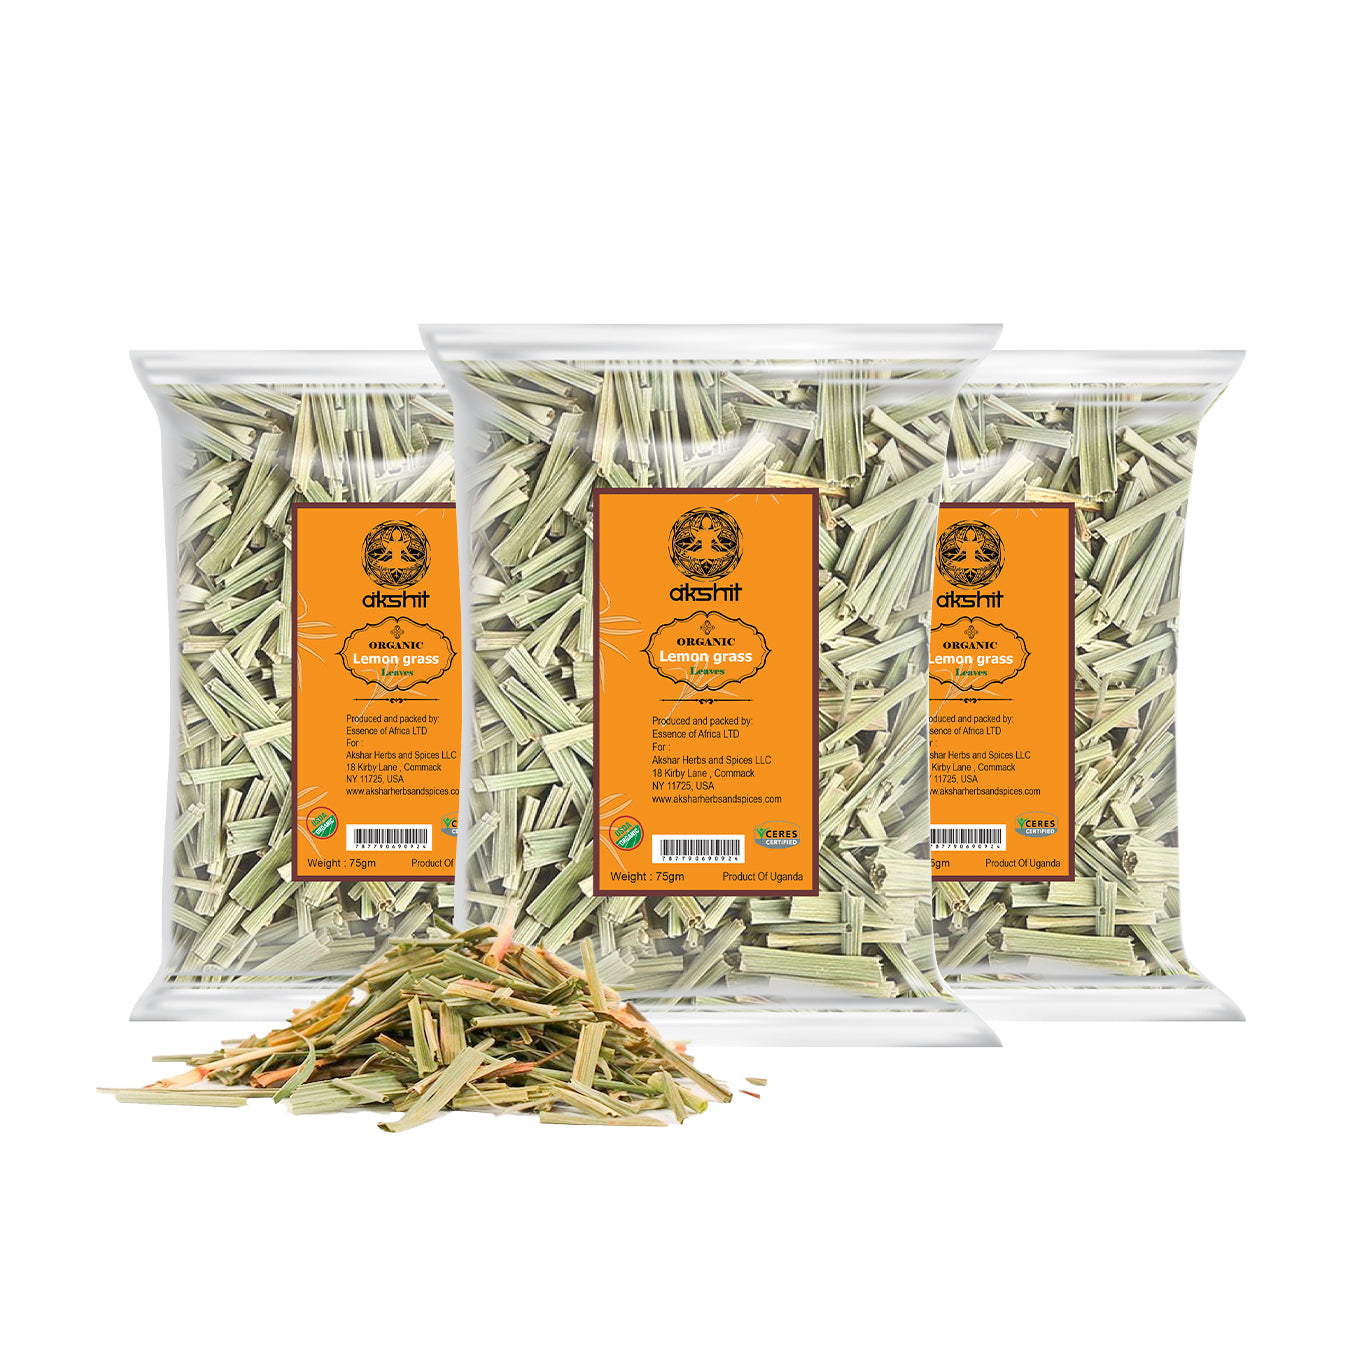 Organic Lemongrass Herbal Tea - Made with Premium Quality Organic Lemongrass